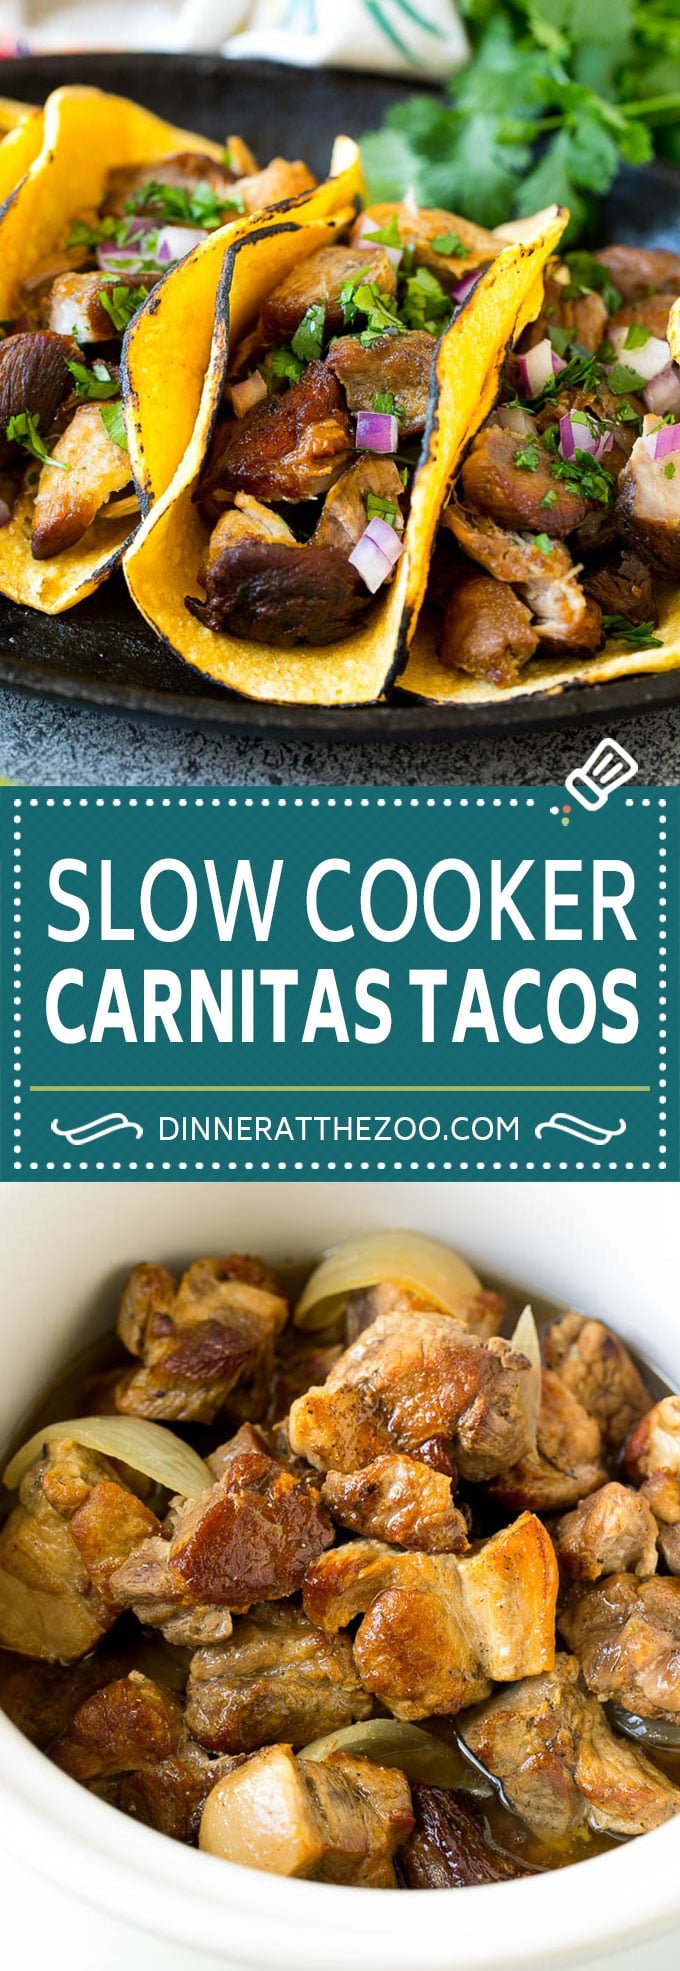 Slow Cooker Carnitas Tacos Recipe | Pork Tacos #tacos #pork #dinner #slowcooker #crockpot #dinneratthezoo